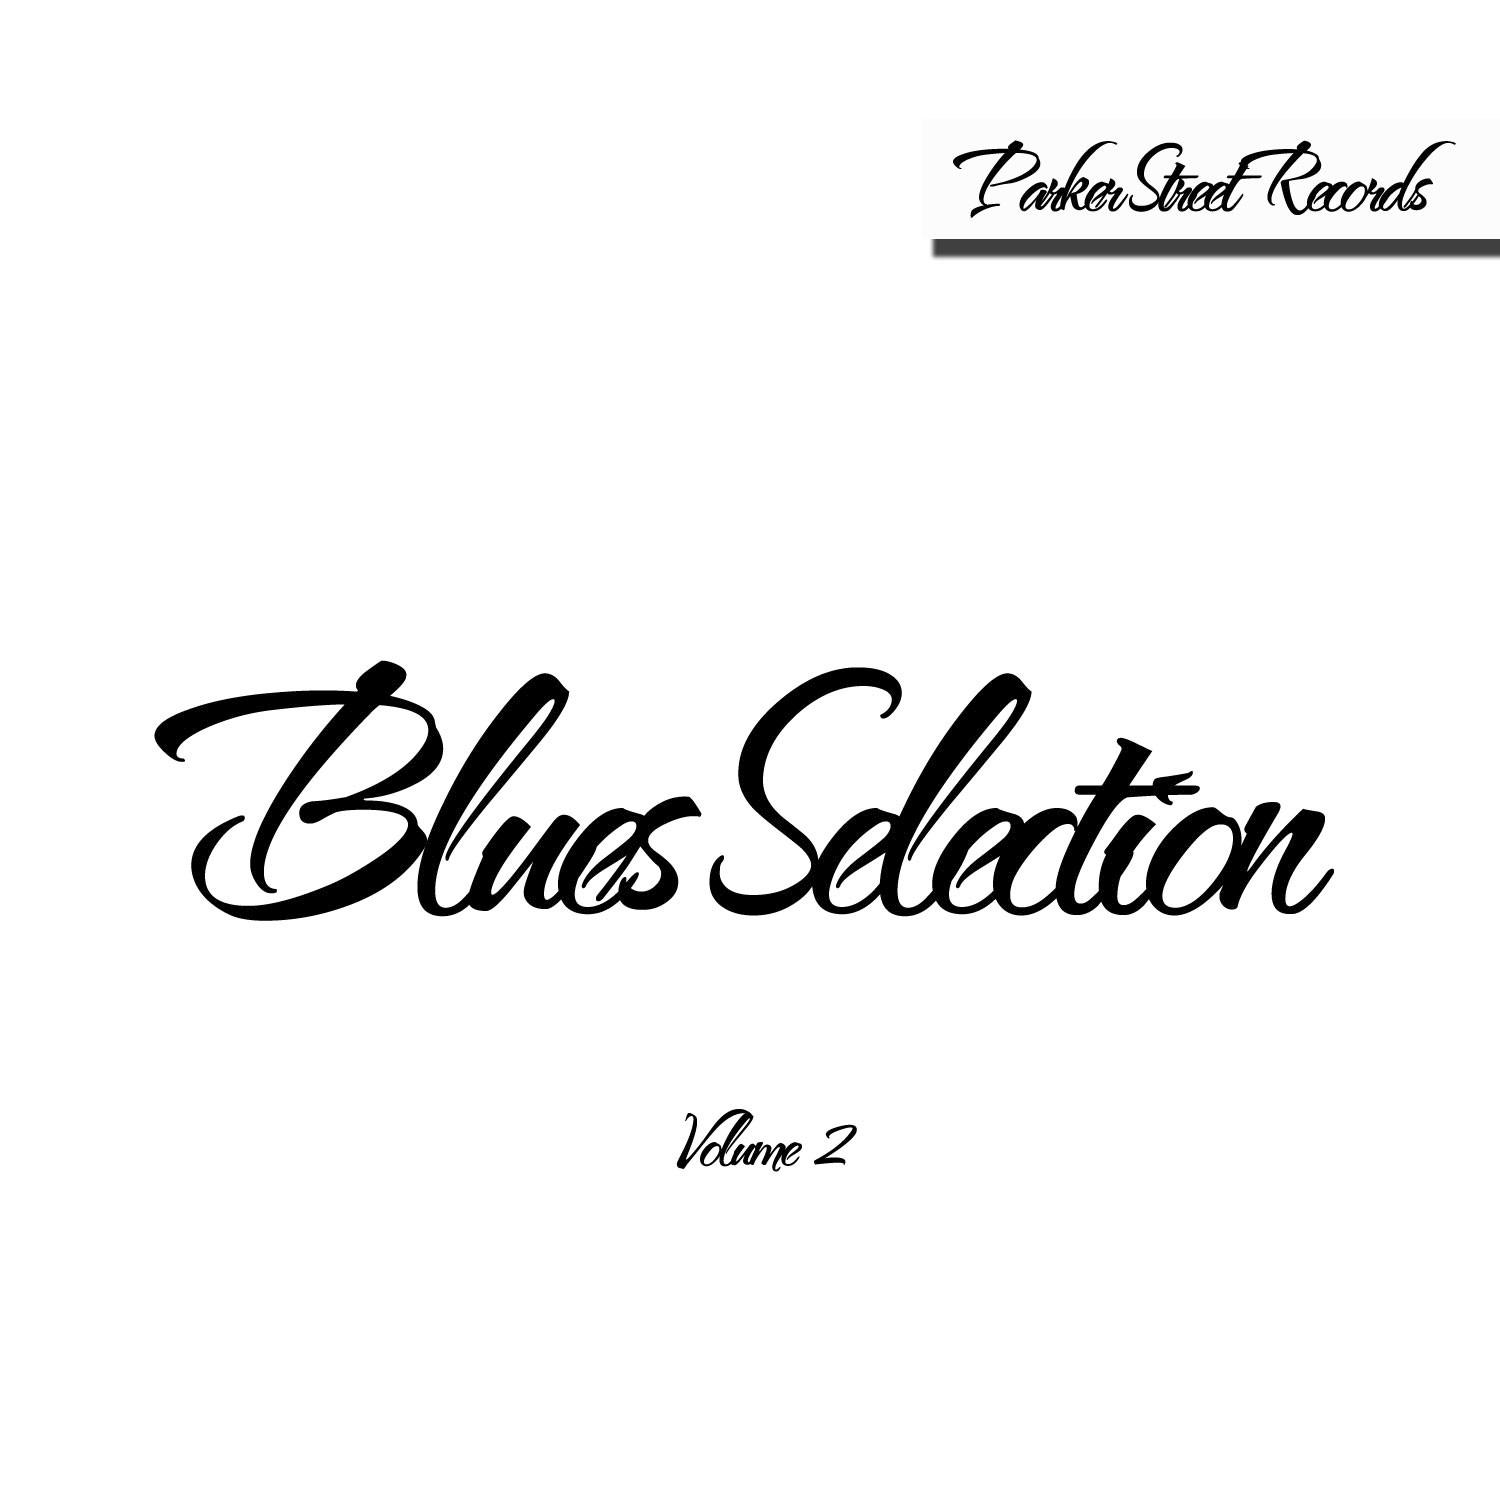 Blues Selection, Vol. 2